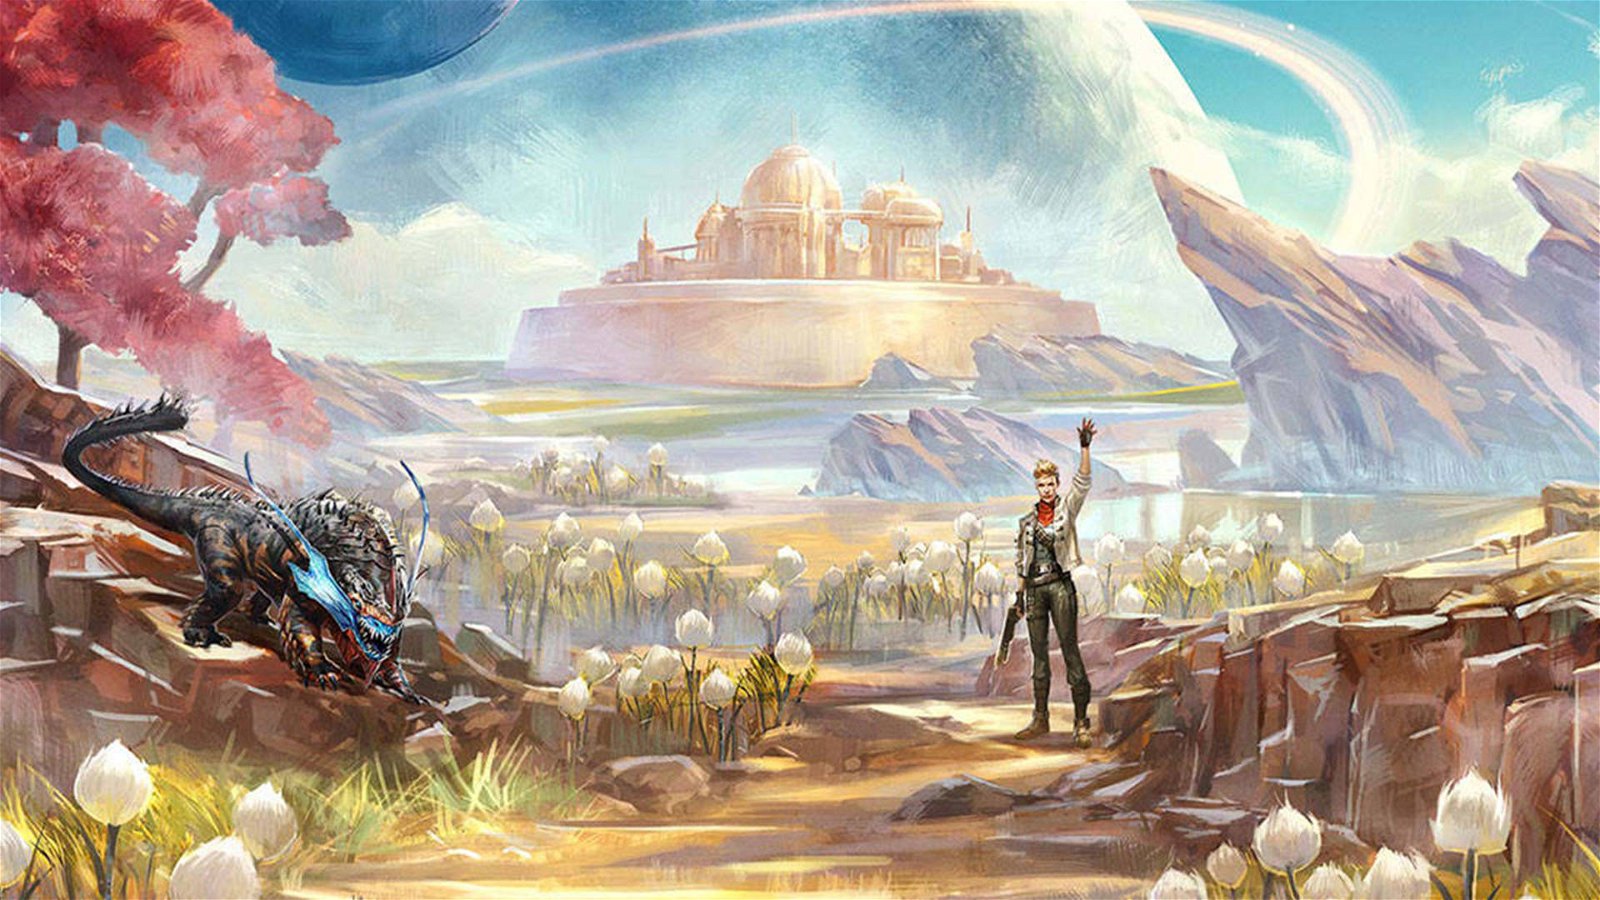 Immagine di The Outer Worlds: DLC in arrivo nel 2020